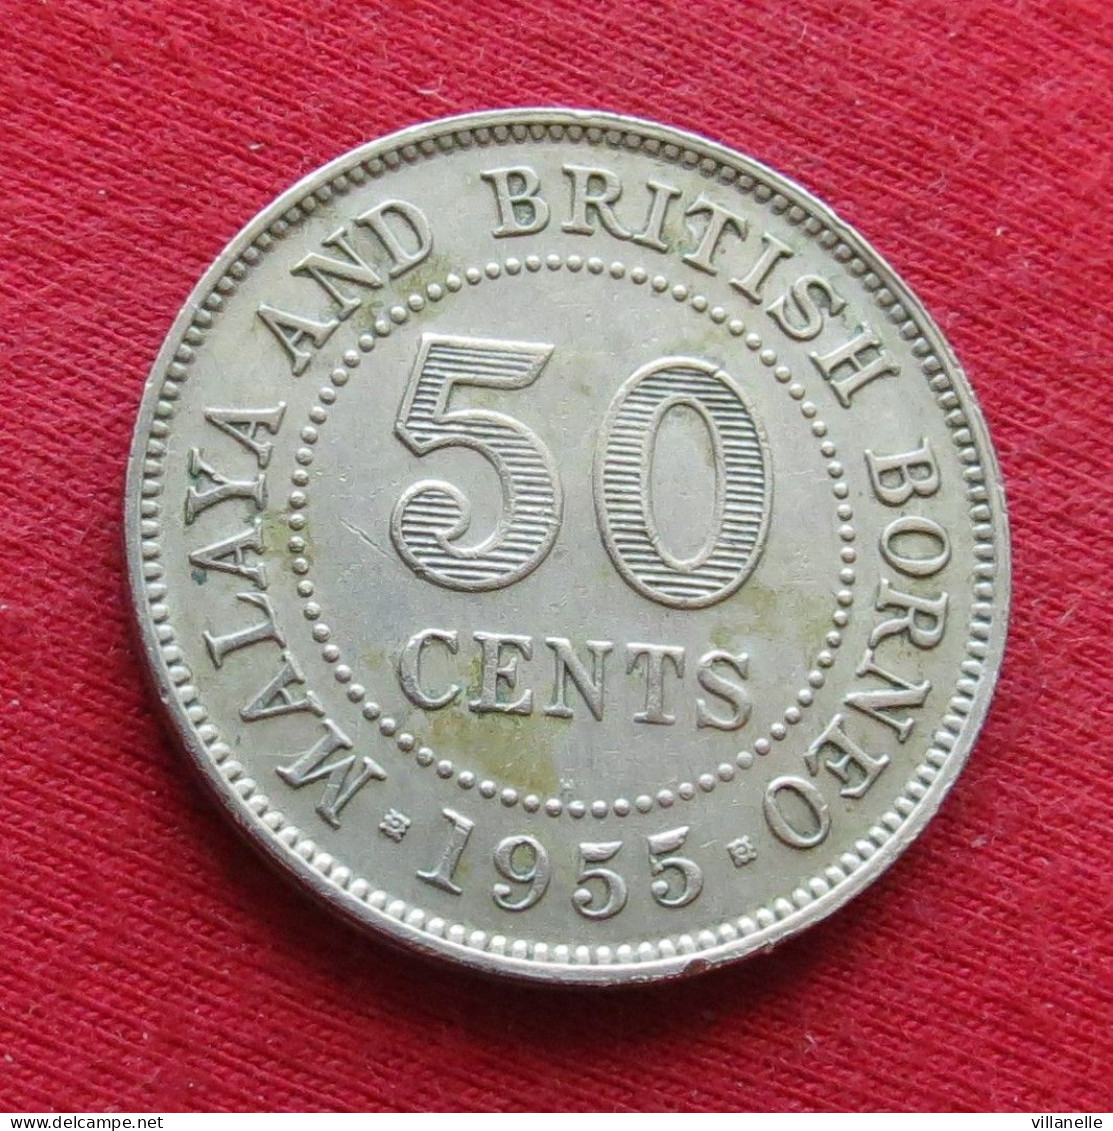 Malaya And British Borneo 50 Cents 1955 H W ºº - Malaysia